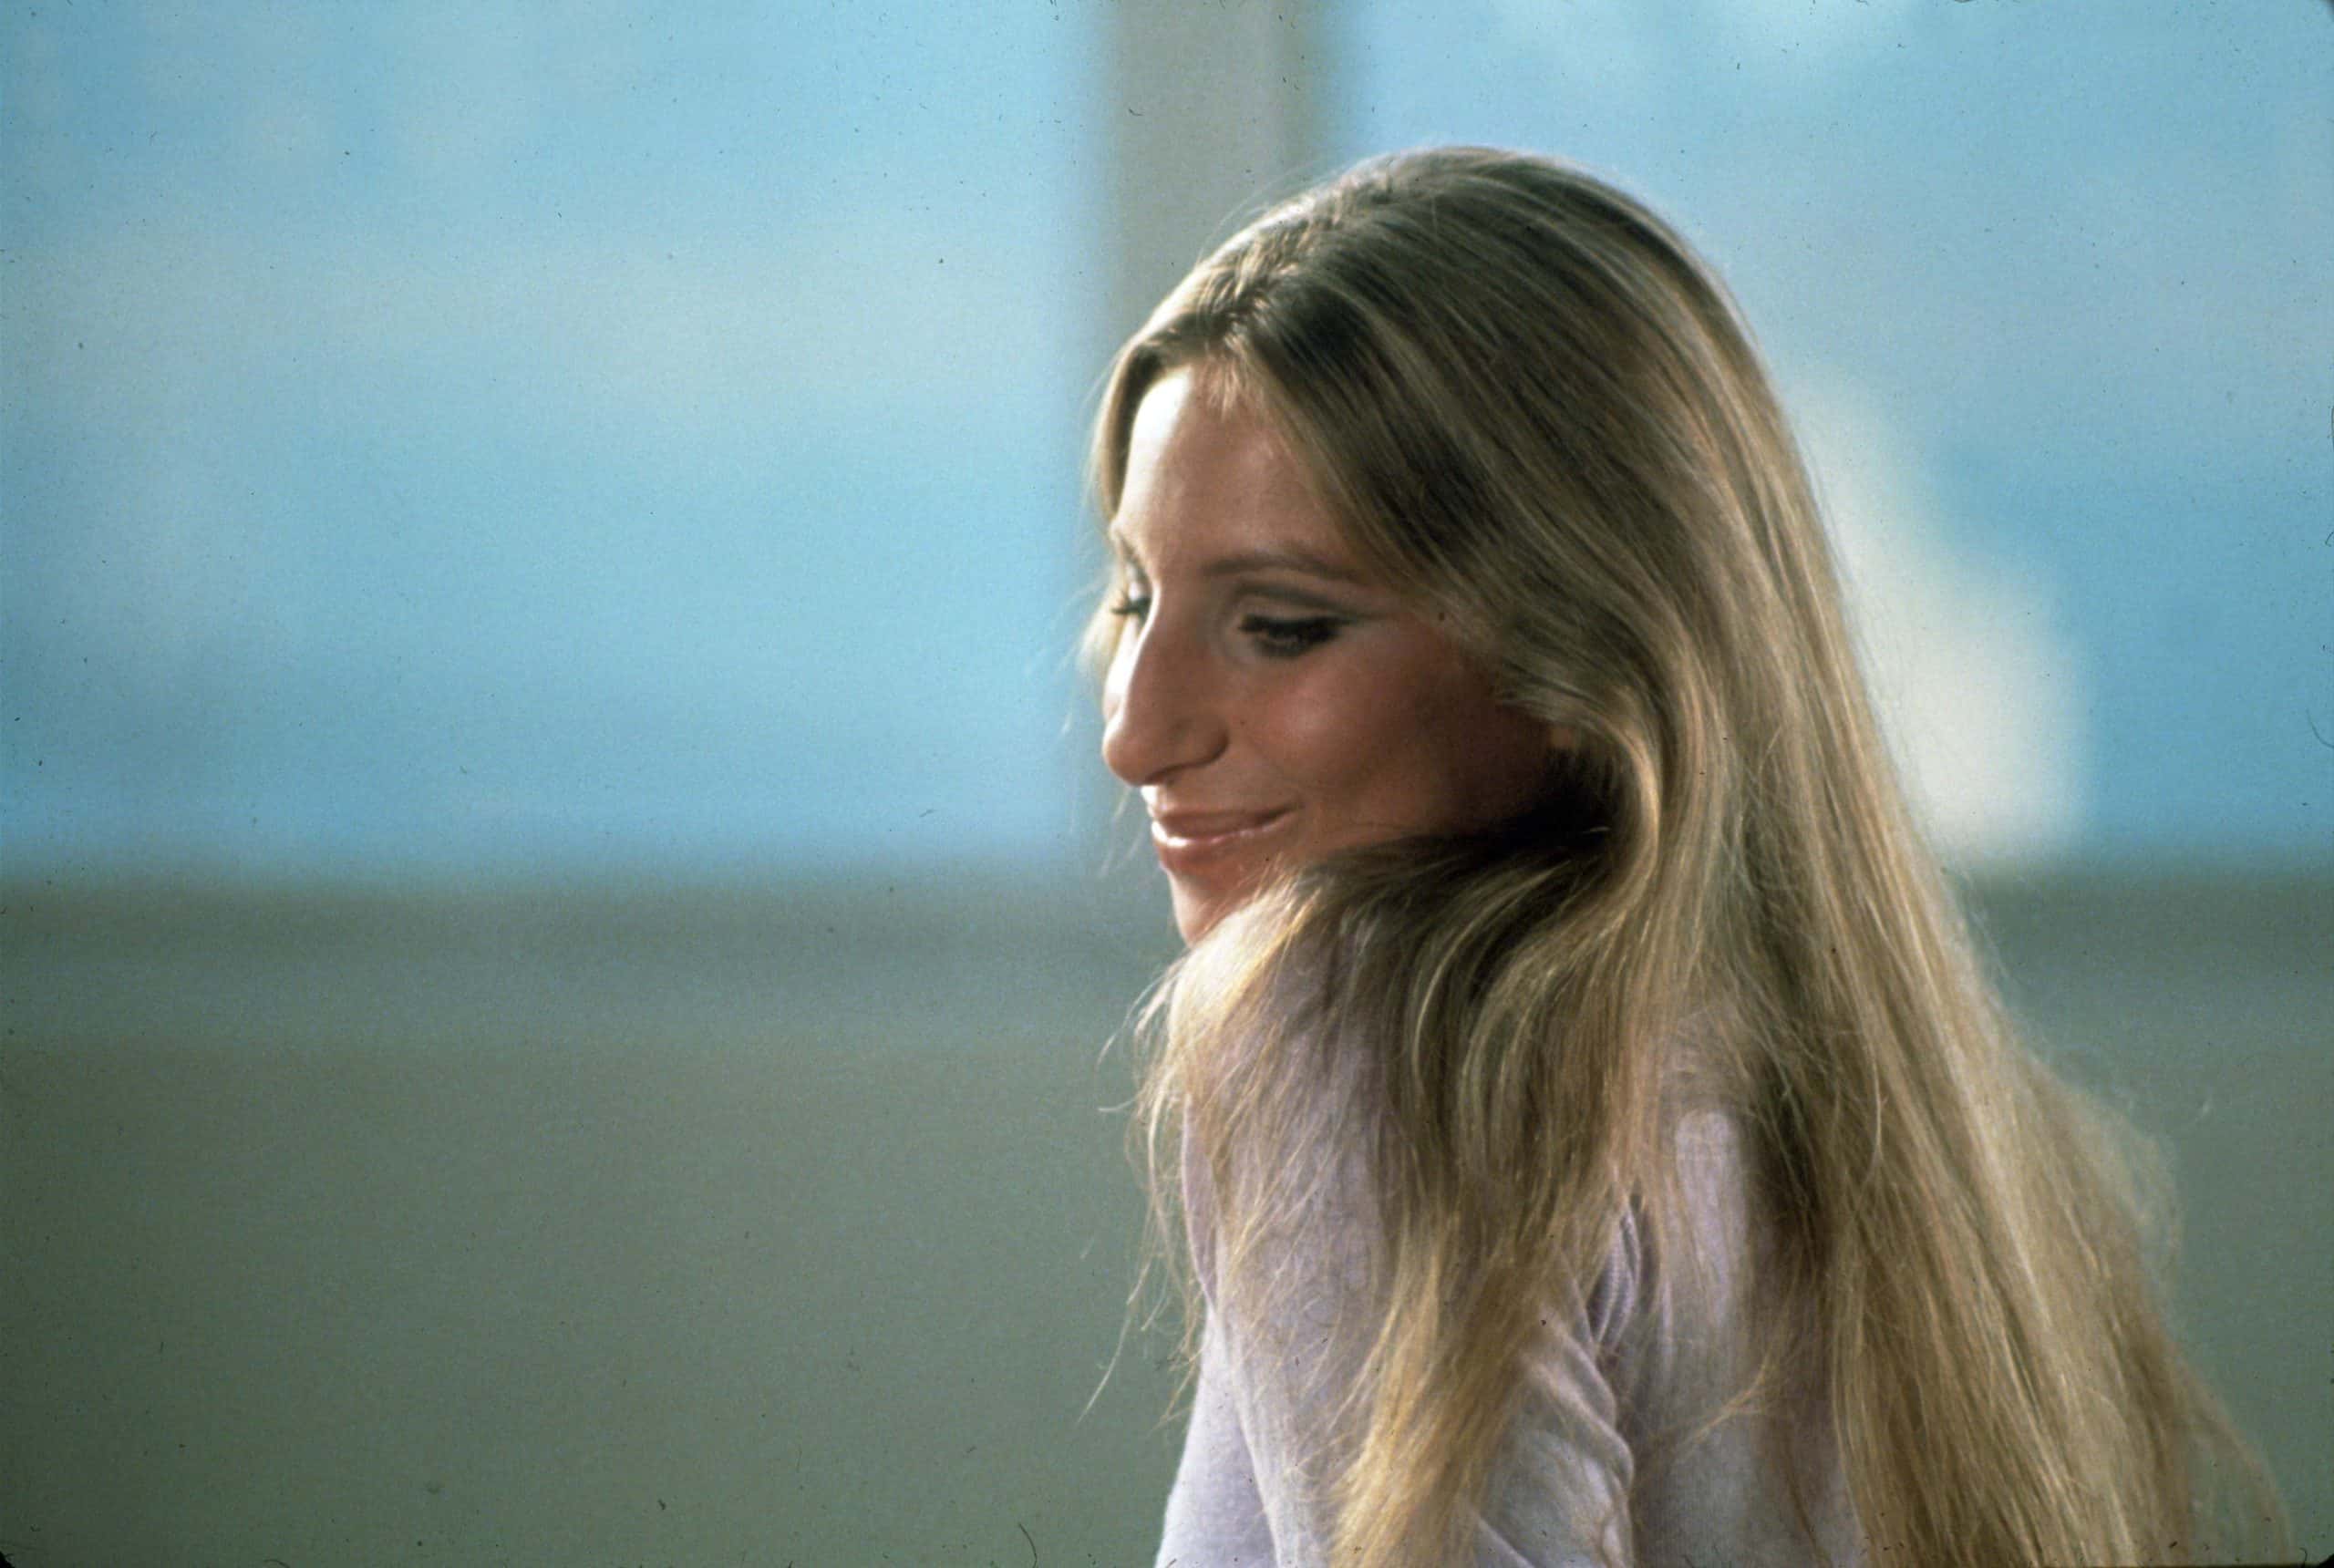 80 éves lett Barbra Streisand – A “vicces lány”, aki sosem félt önmaga lenni